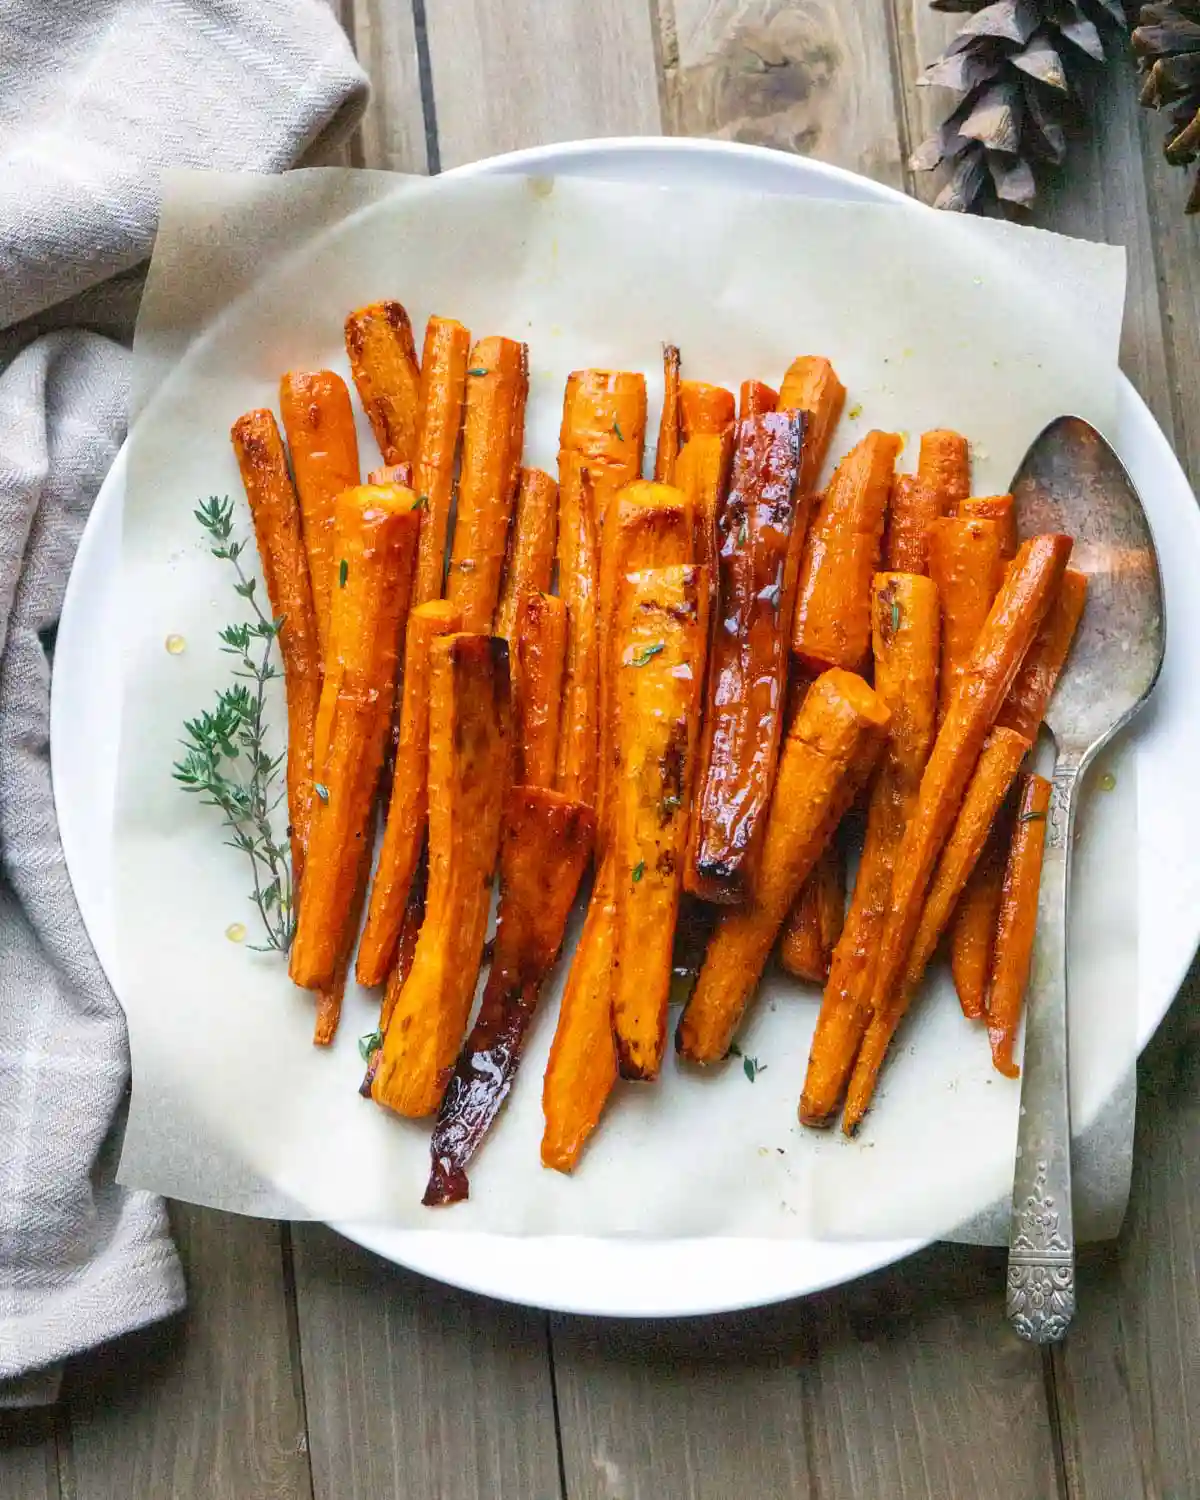 Sliced carrots on a plate